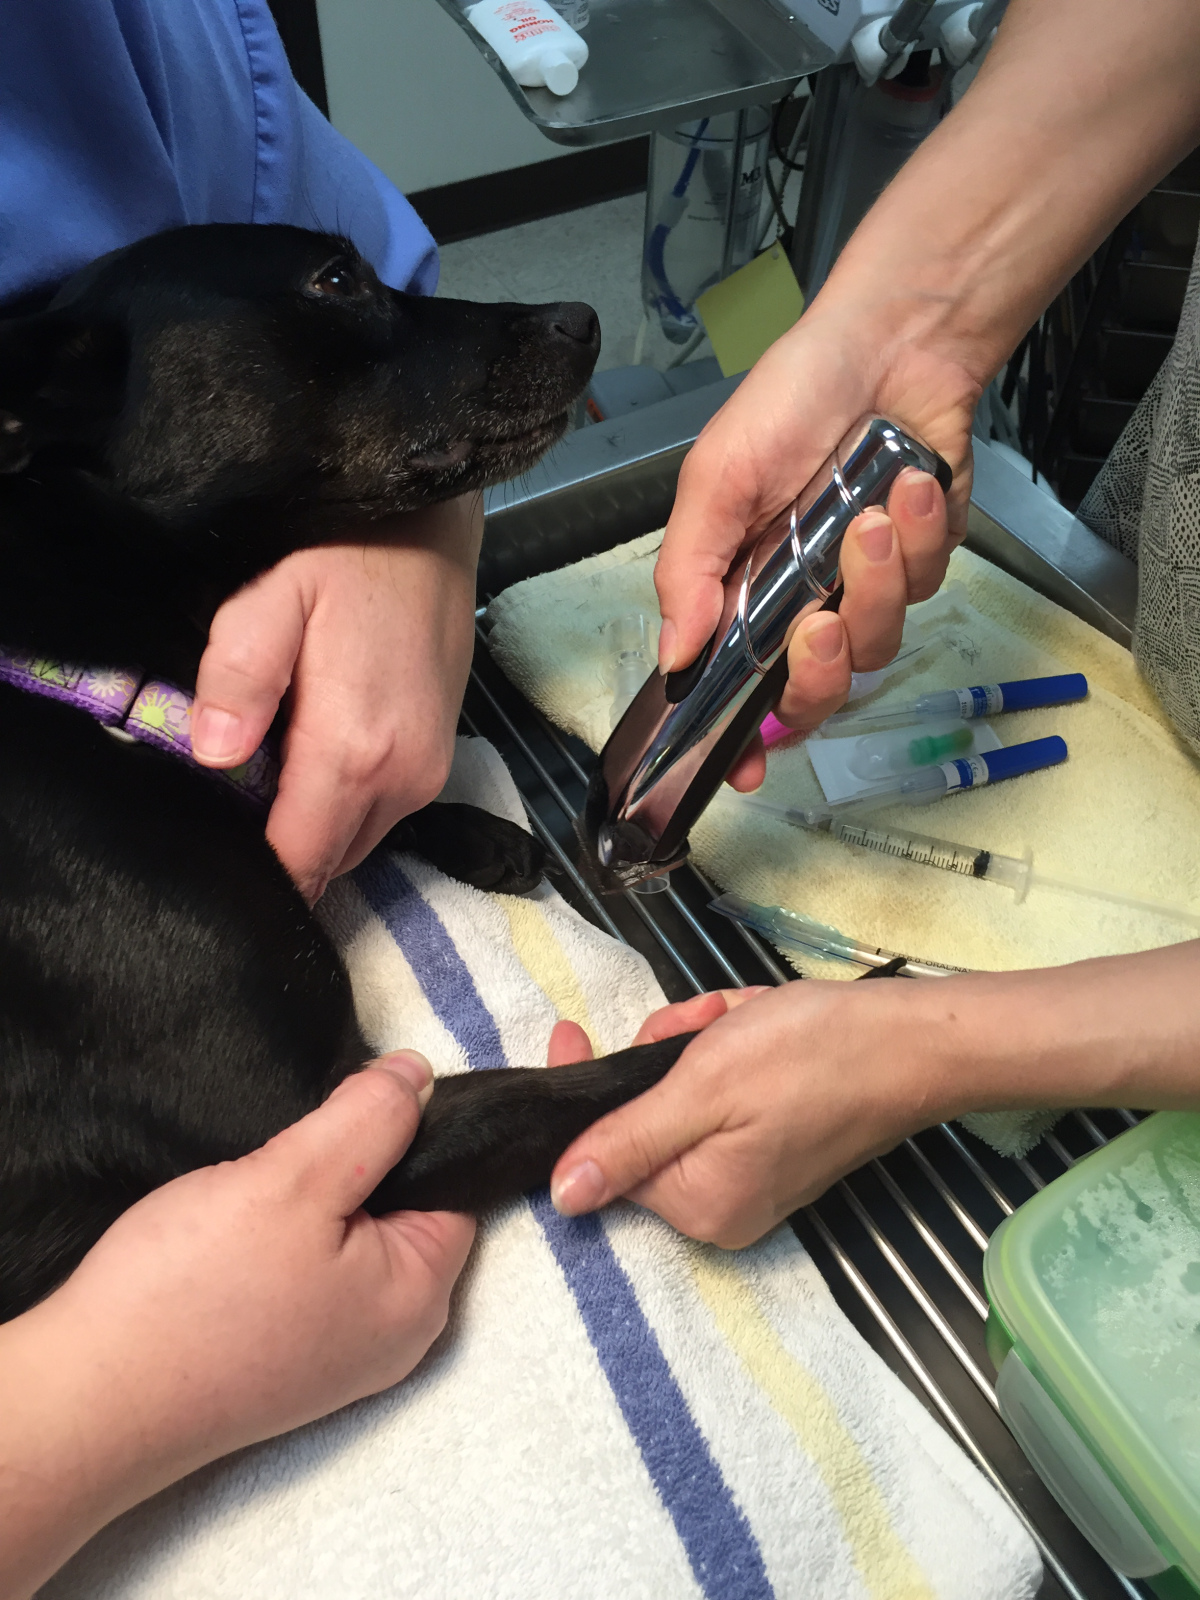 Vet and technician examining dog